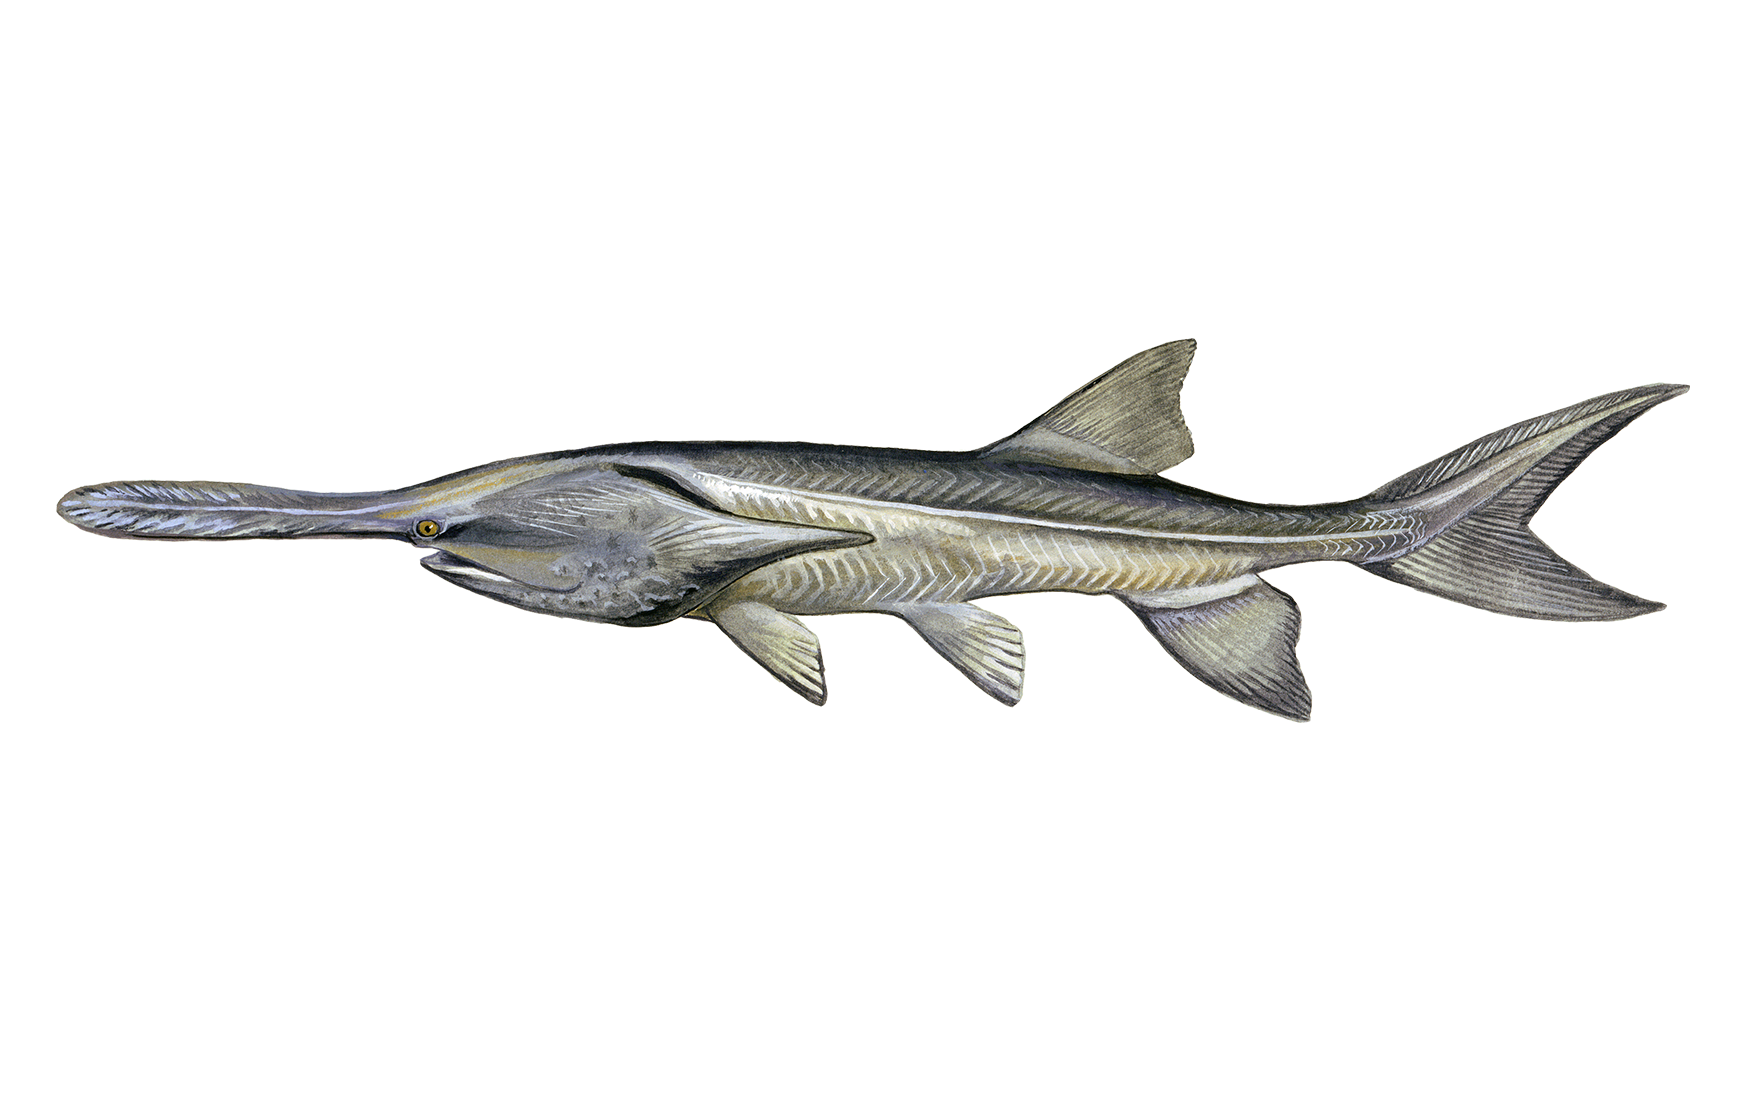 Crazy details on this monster 🦖 #bluecatfish #spoonbill #fishing # catfishing #reels #lakefishing #riverfishing #bigfish #paddlefish #